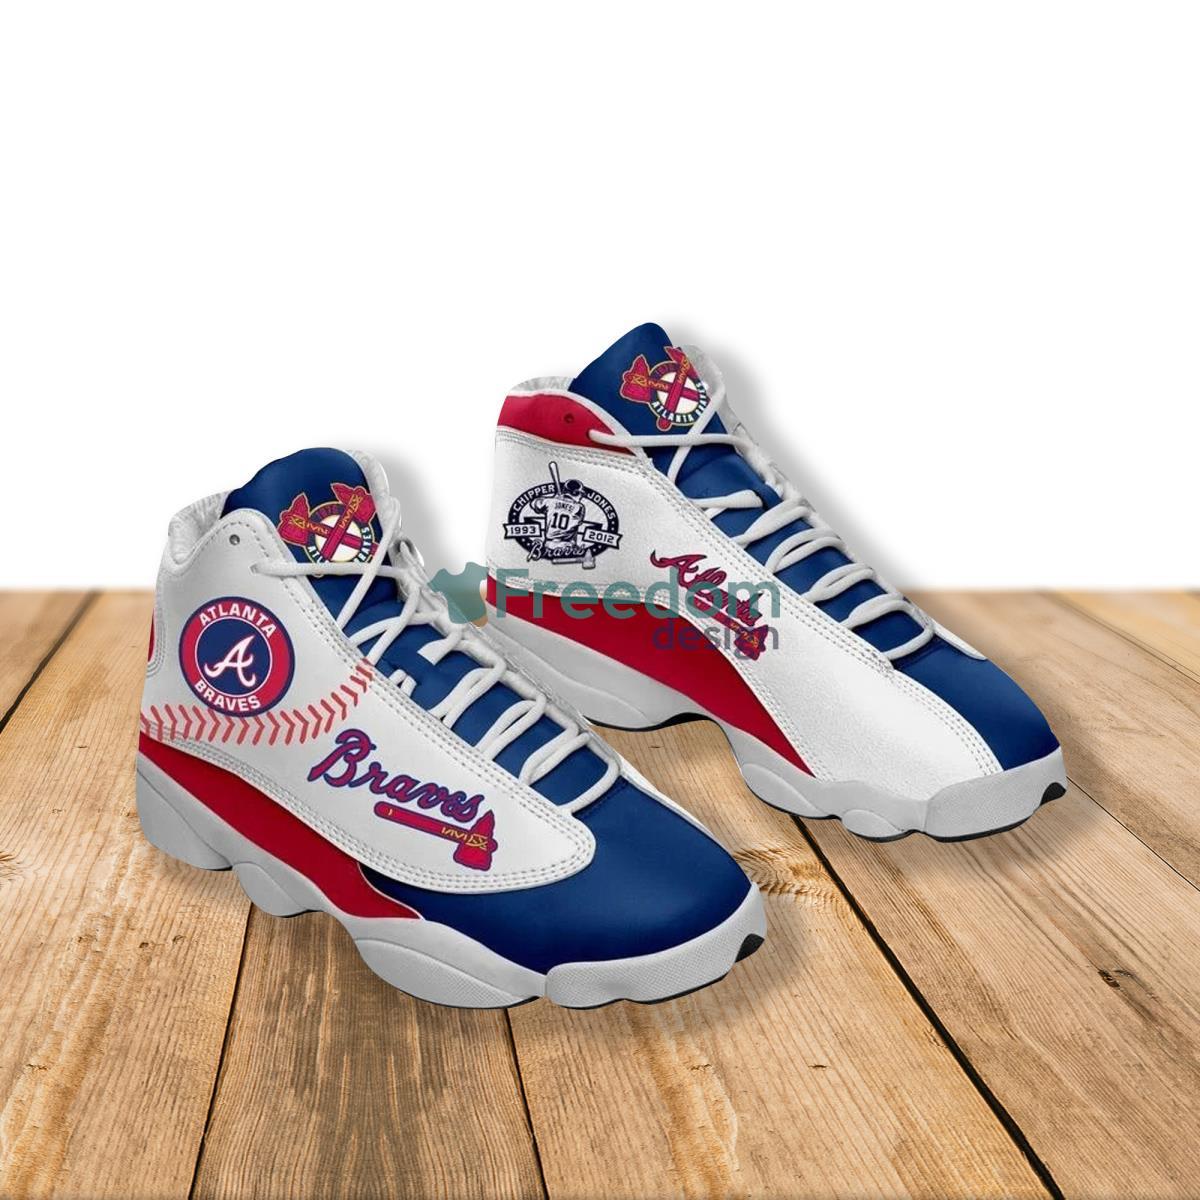 Alanta Braves Football Team Air Jordan 13 Shoes Product Photo 1